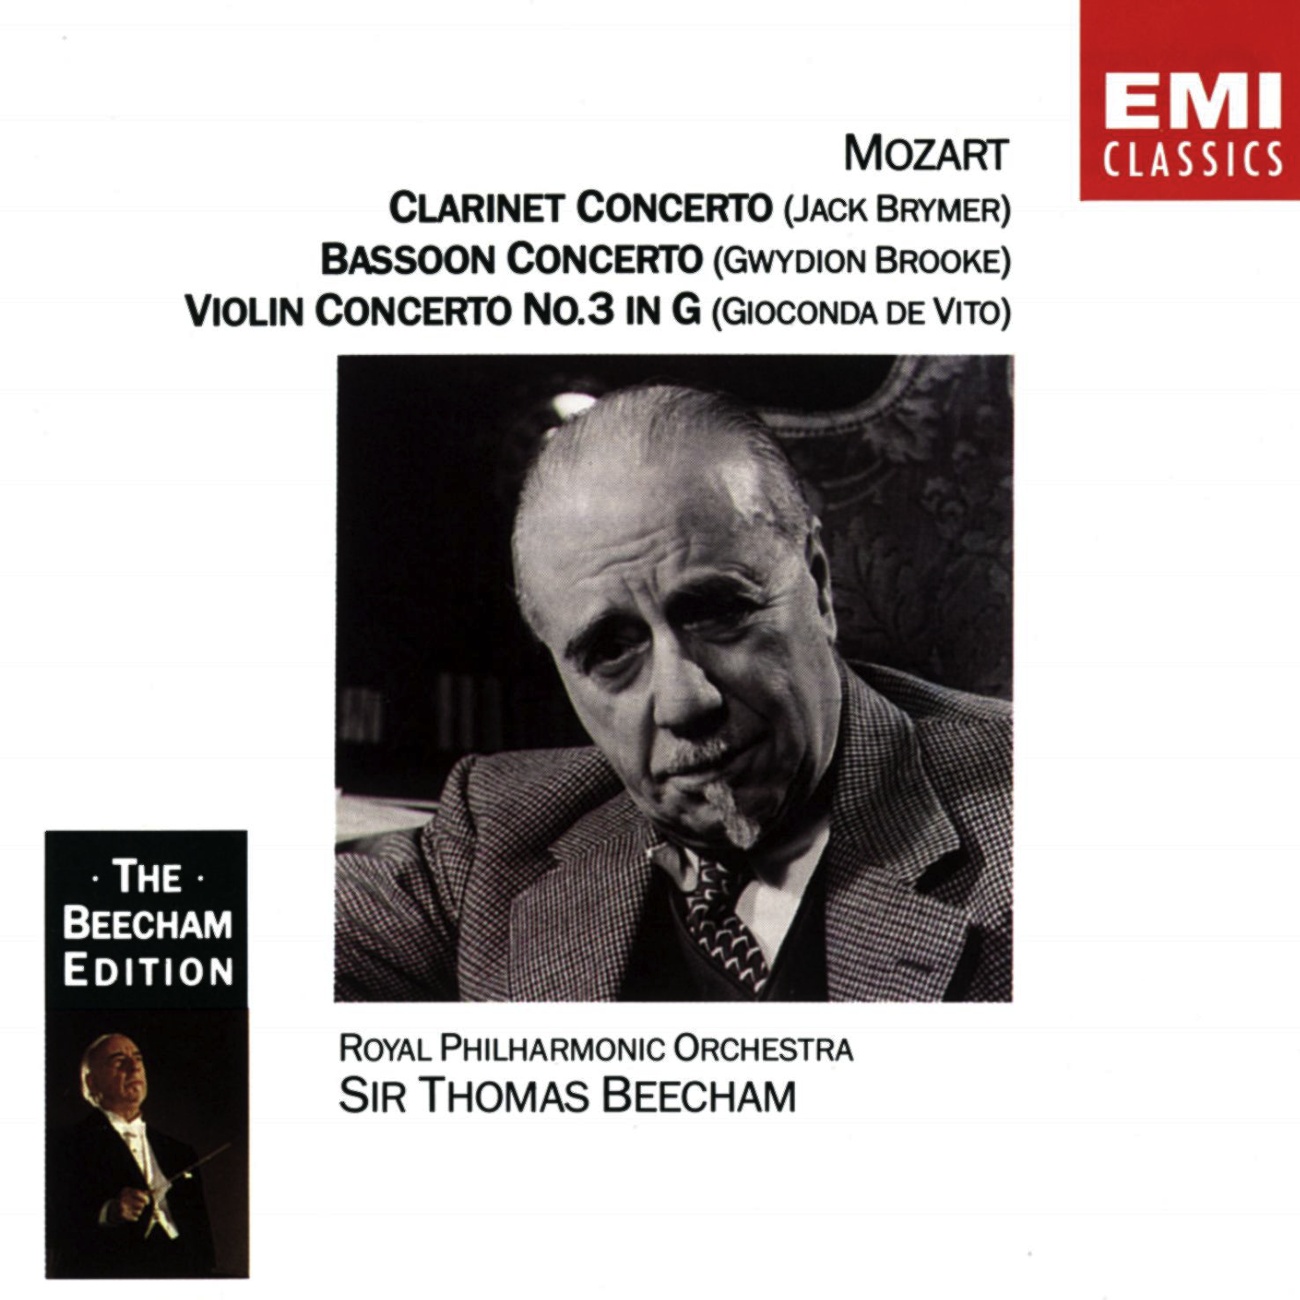 Concerto for Violin and Orchestra No. 3 in G K216 (1991 Digital Remaster): I.   Allegro (cadenza: Sir Donald Tovey)